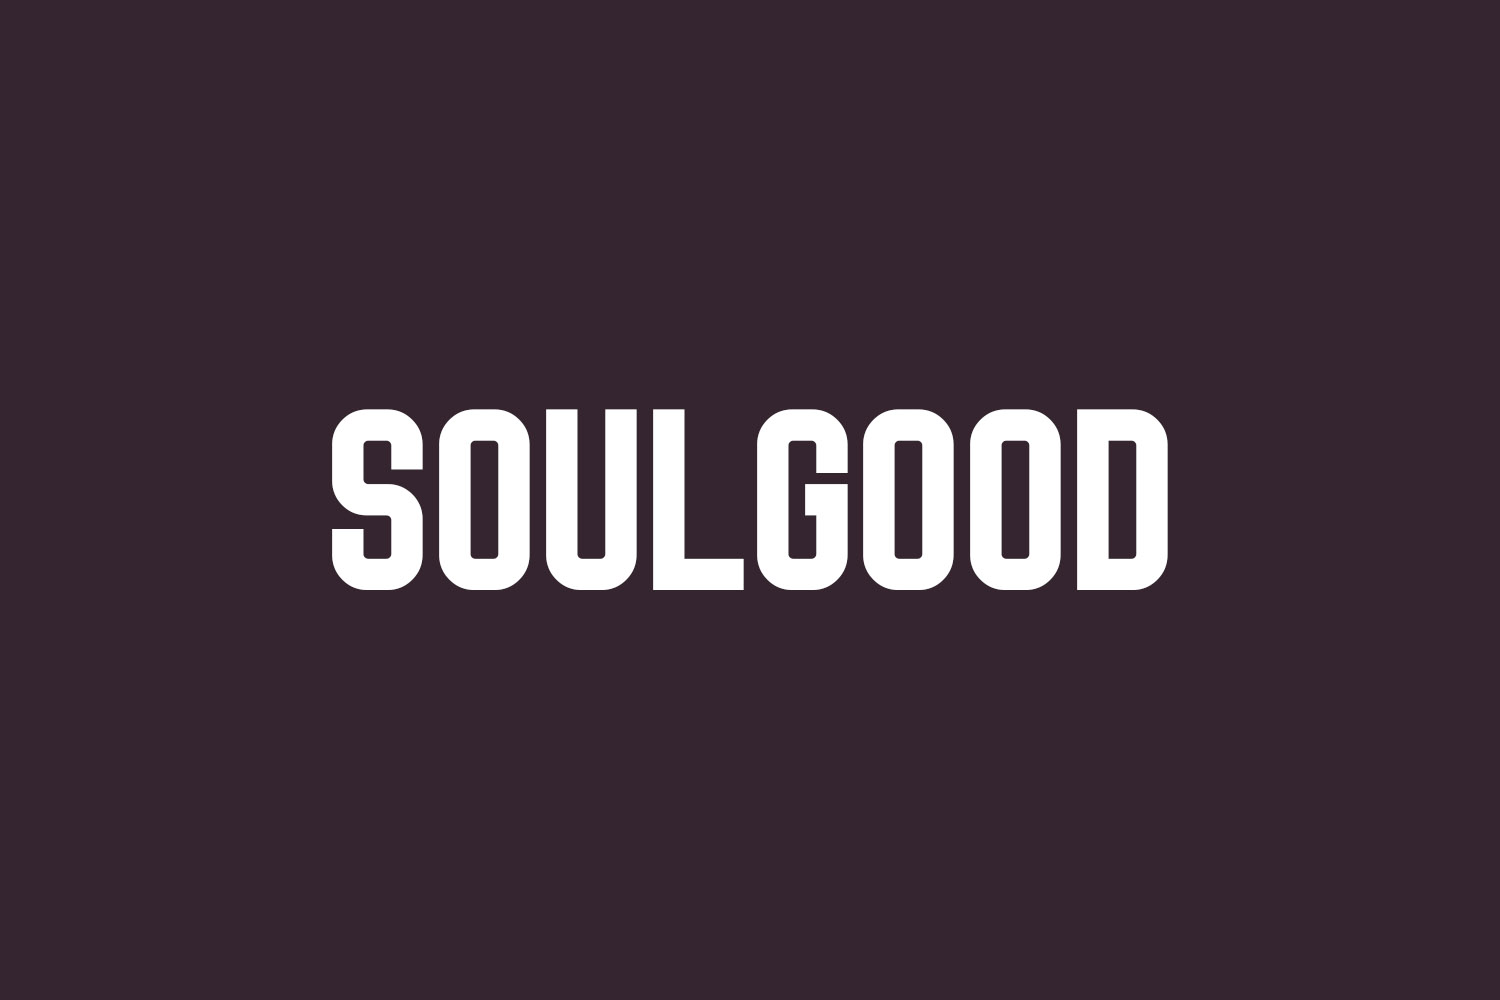 Soulgood Free Font